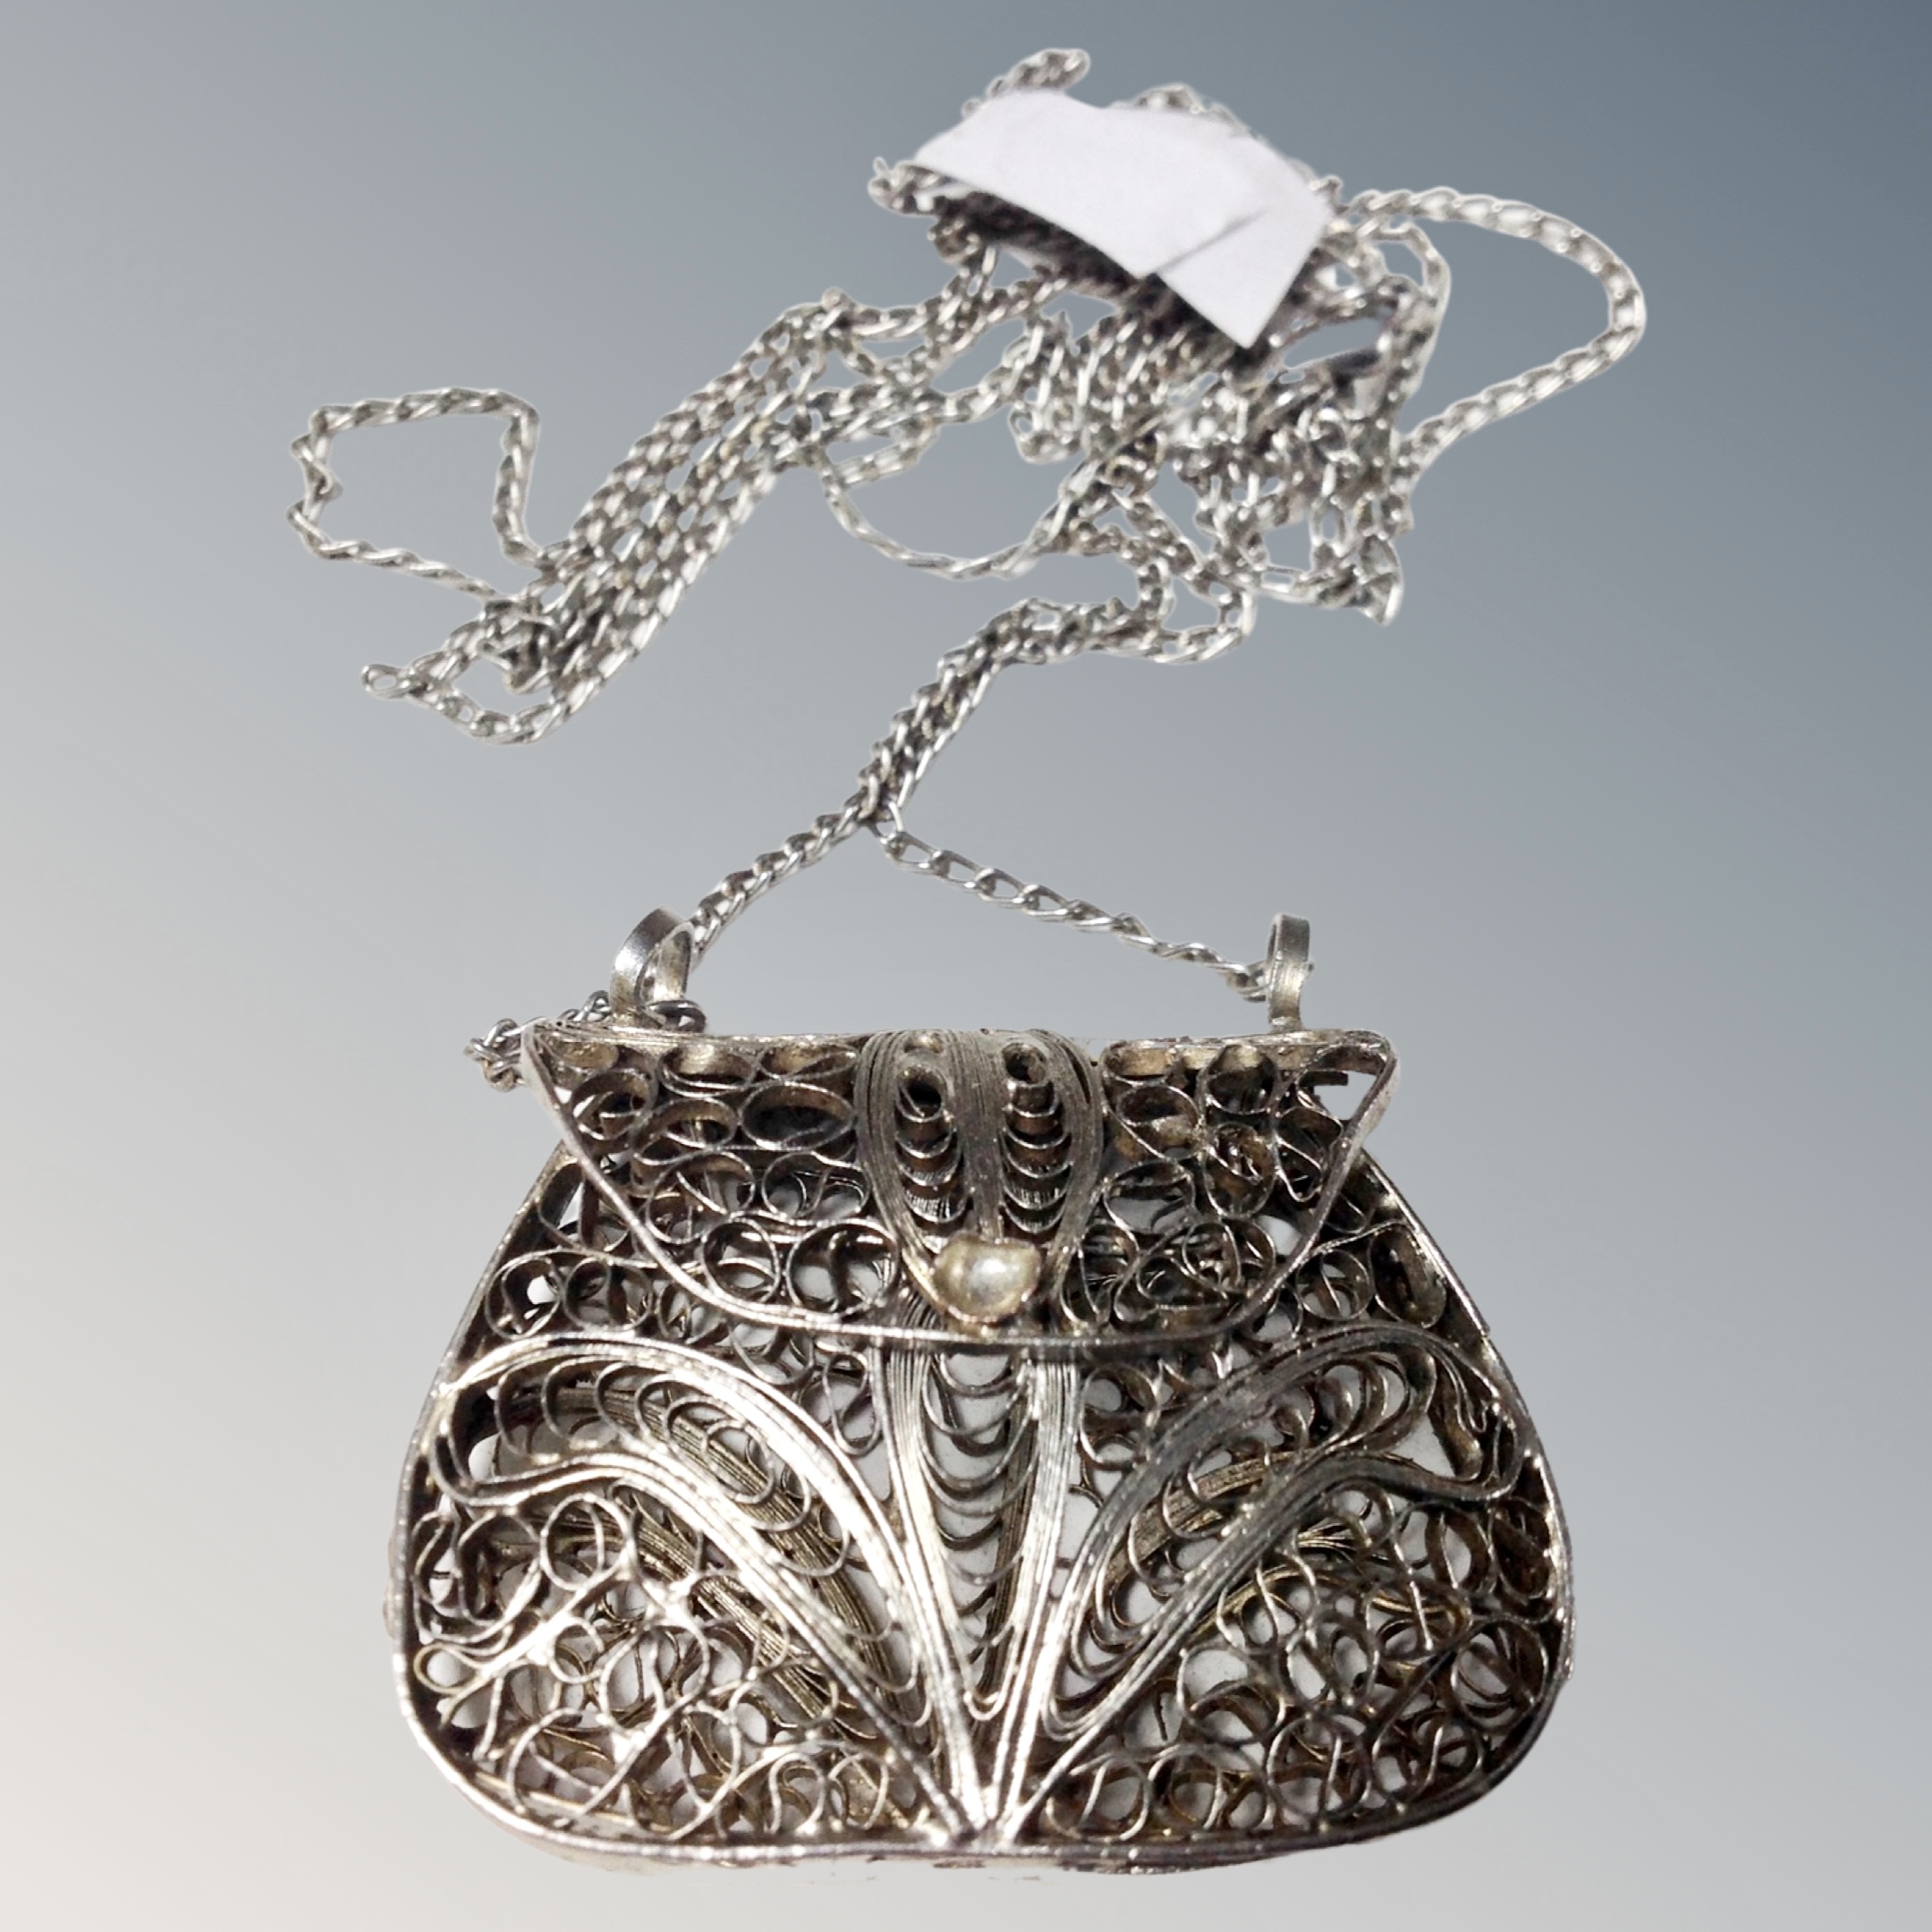 A white metal miniature handbag on chain, possibly used as a vinaigrette.